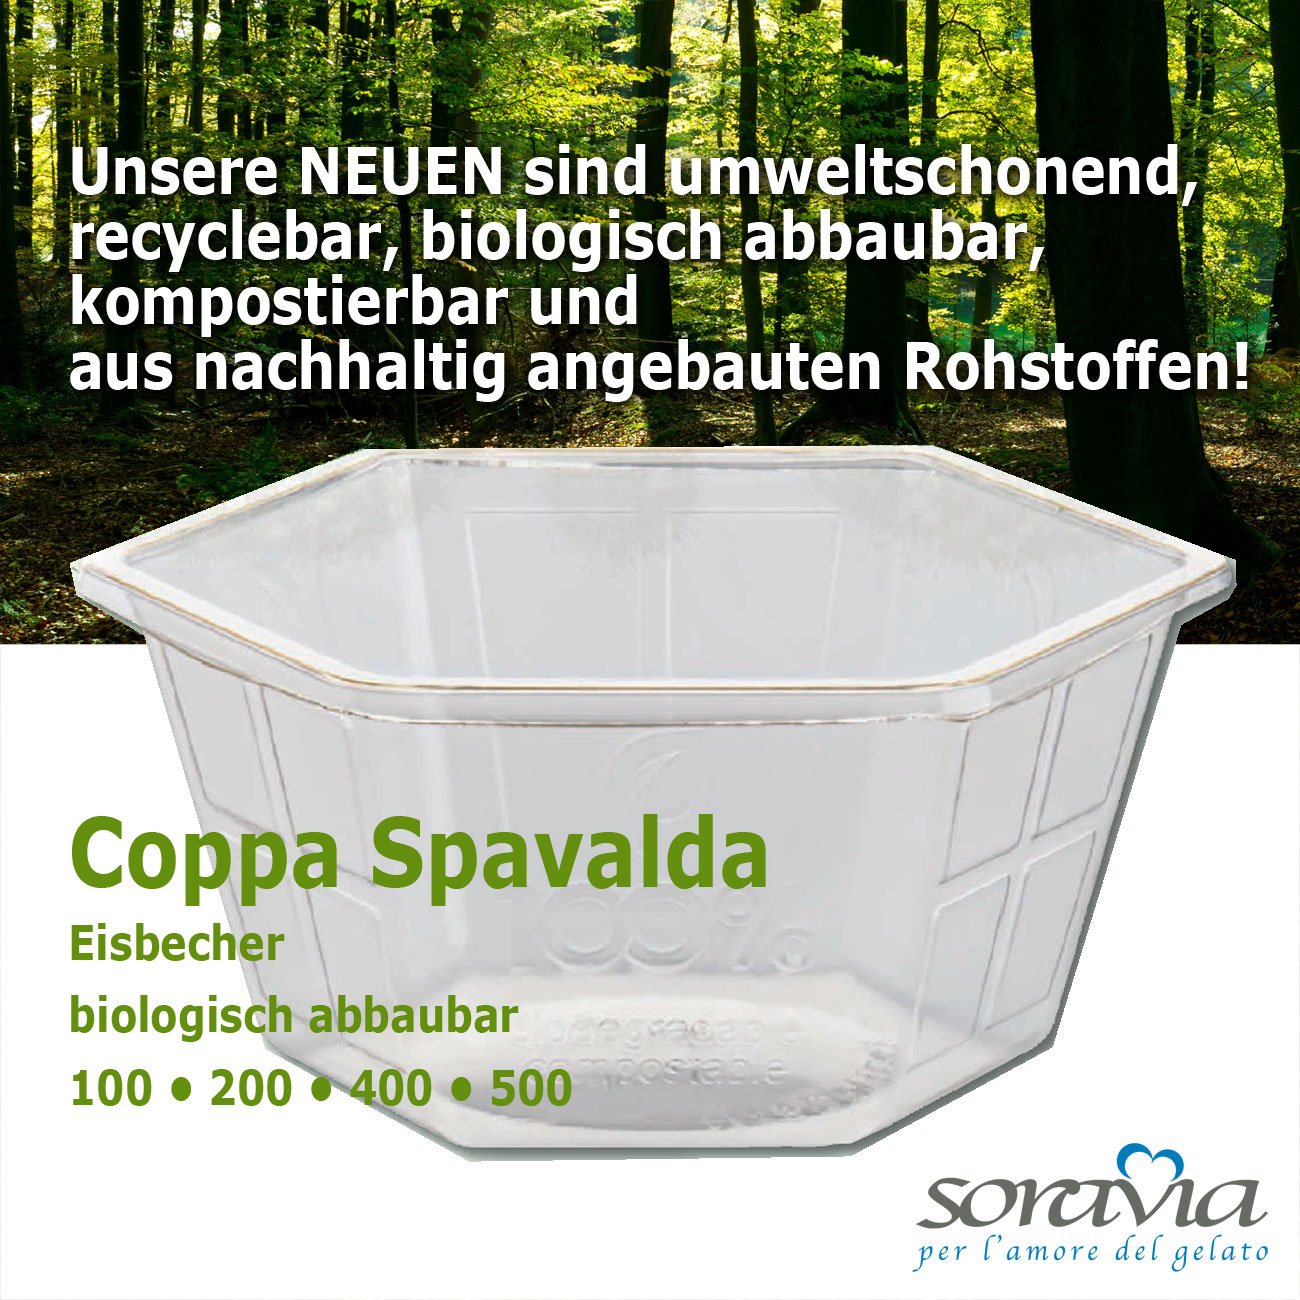 Coppa Spavalda 400 - box 800 pieces - Ice cup biodegradable Plastic - coppa plastica 